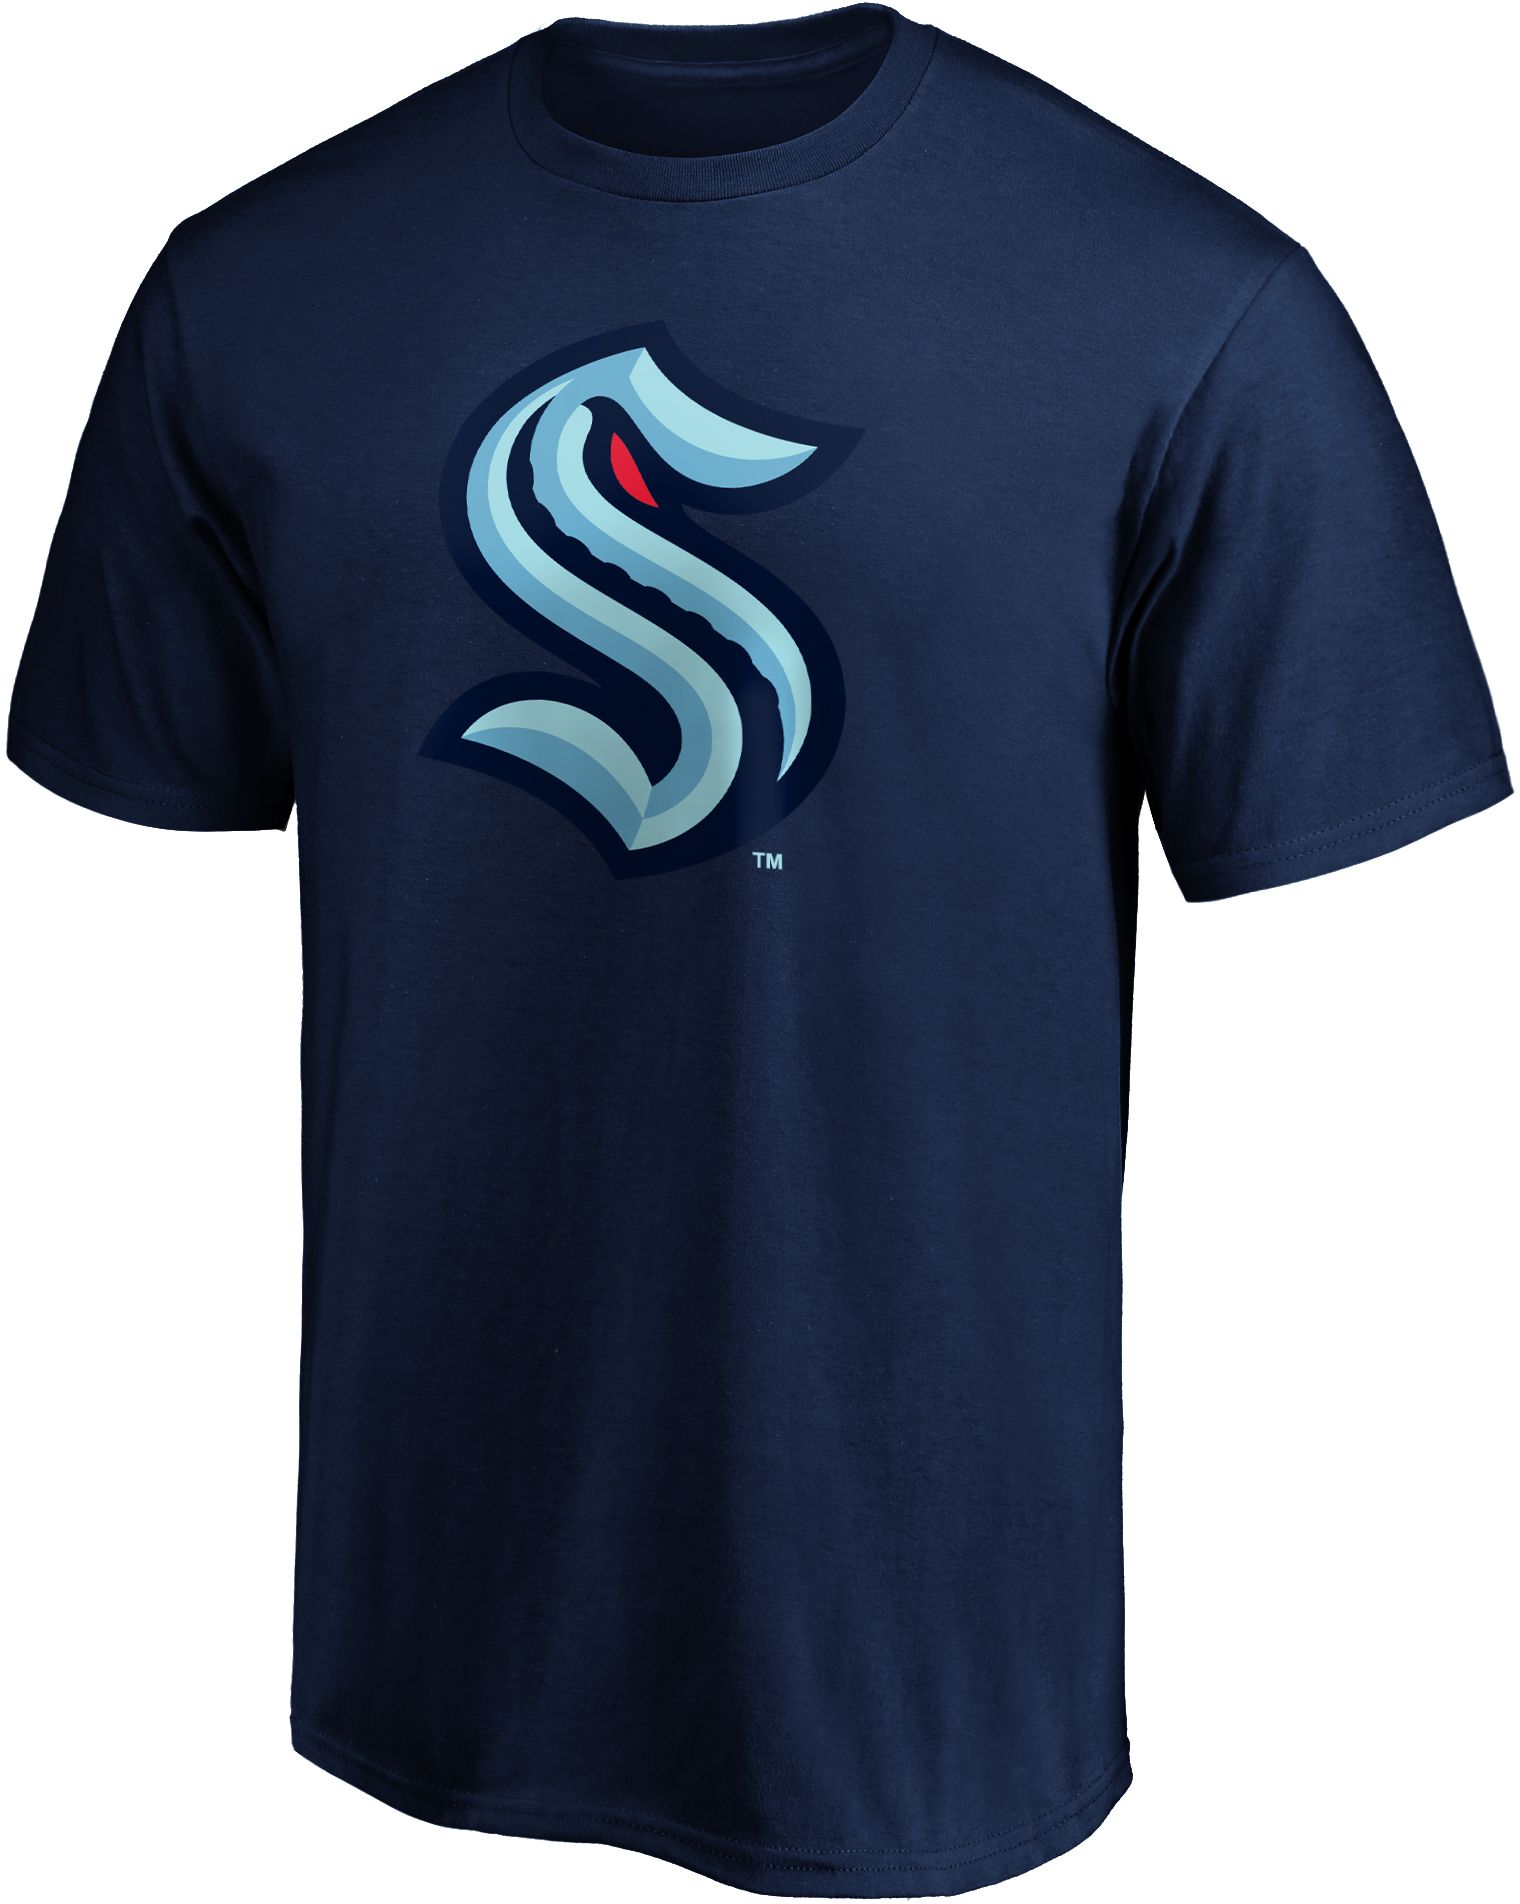 NHL Men's Seattle Kraken Logo Navy T-Shirt